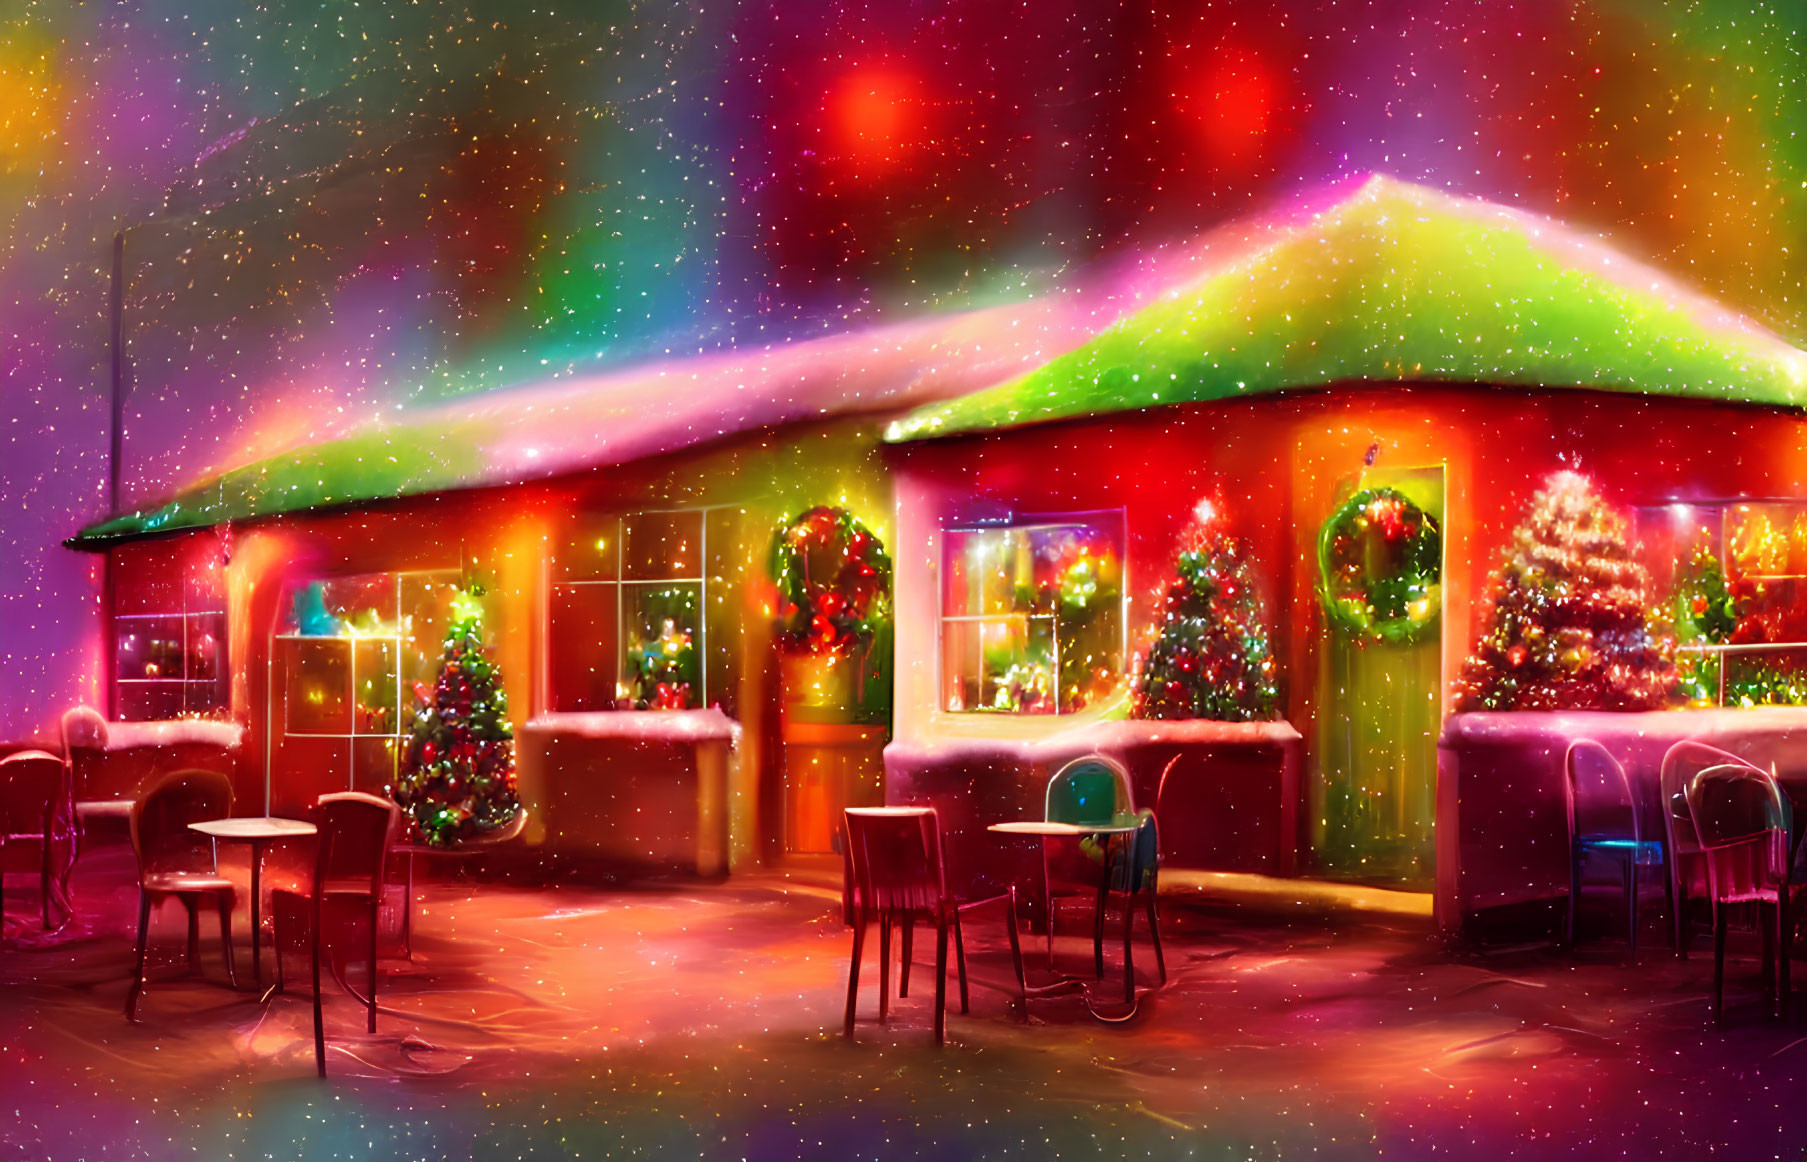 Festive Christmas house with lights under starry sky